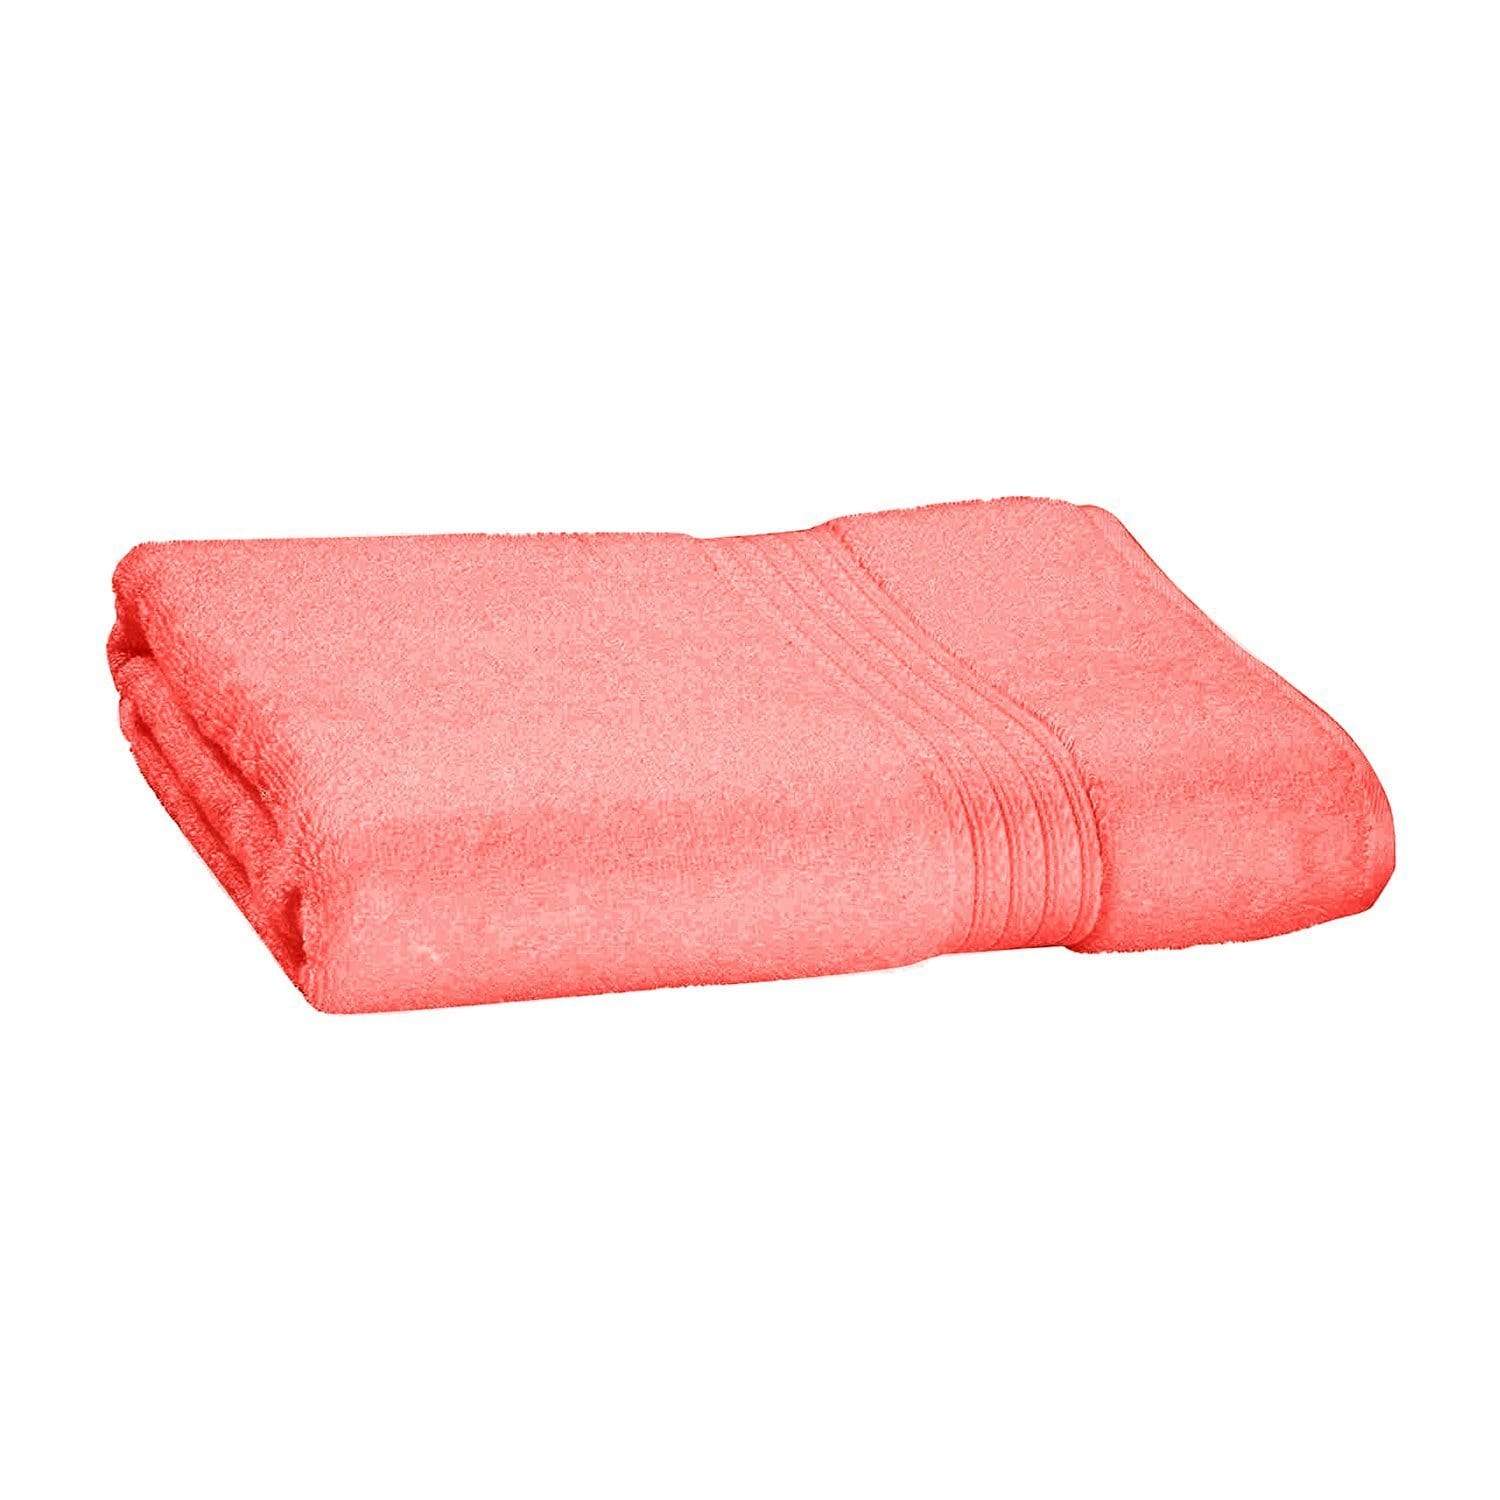 Kassatex Kassadesign Hand Towel - Wild Salmon - KDK-110-WDS - Jashanmal Home